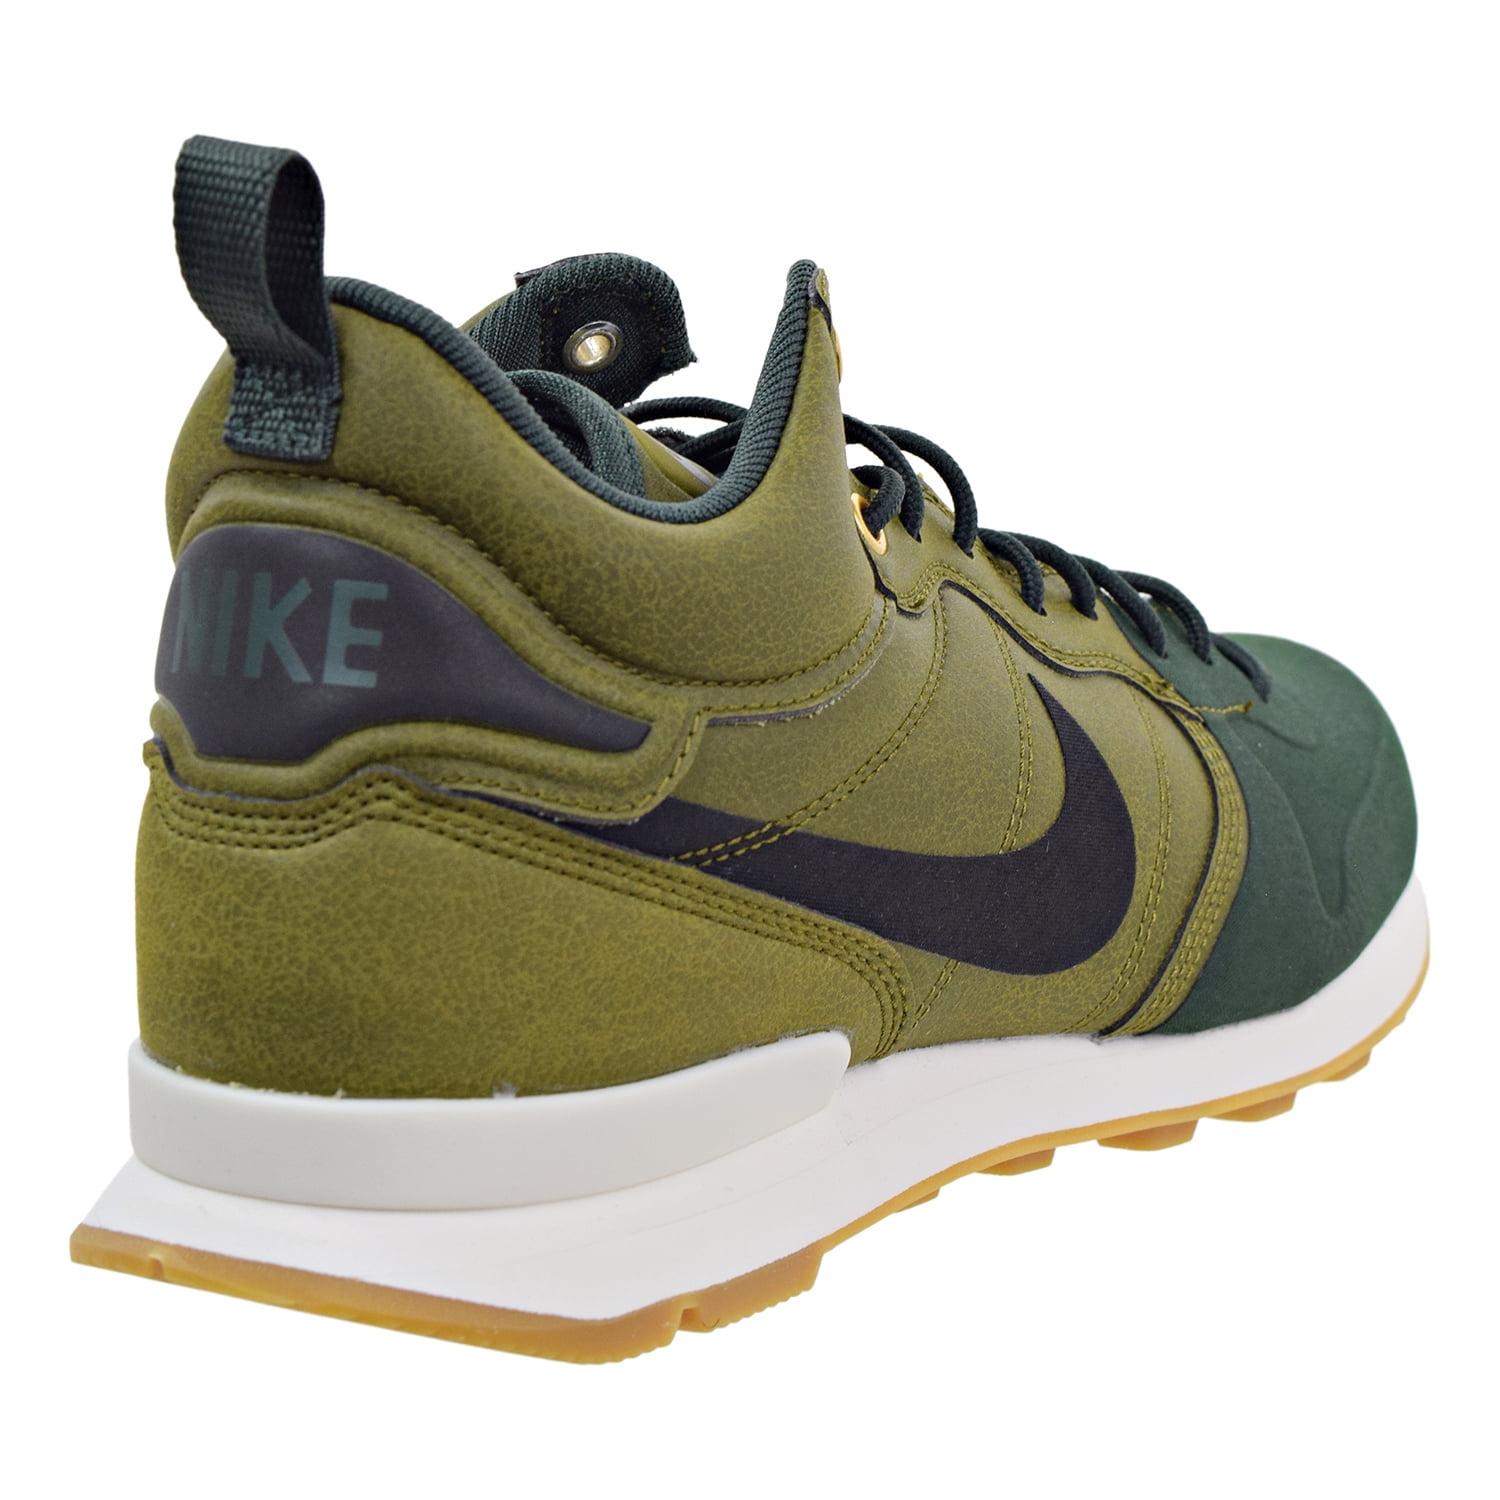 Para llevar Rico personalizado Nike Internationalist Utility Men's Shoes Olive Flak/Black/Grove Green  857937-300 - Walmart.com